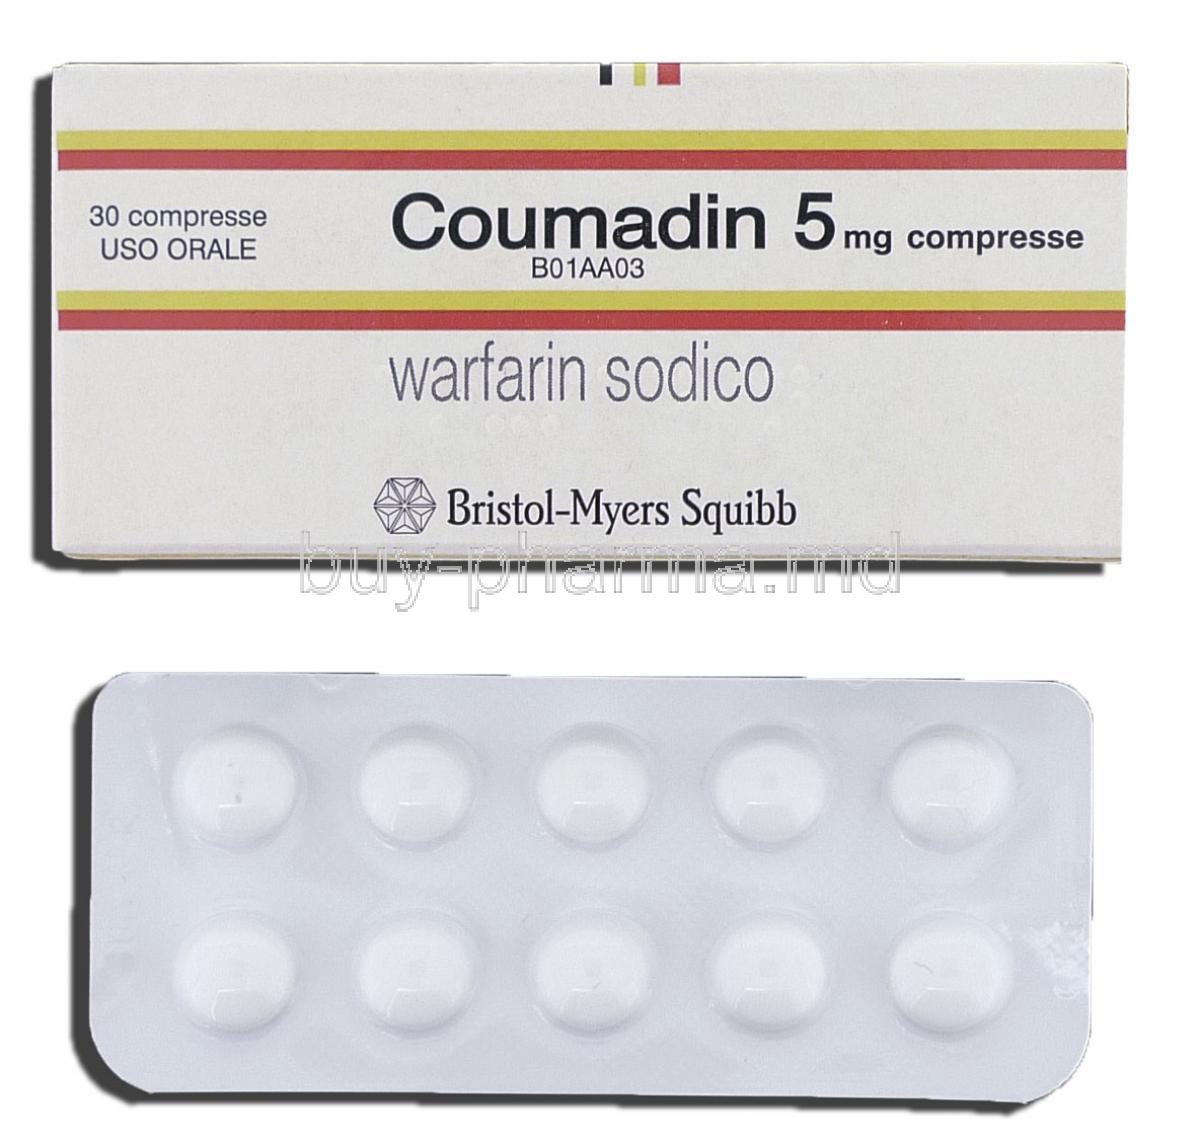 Coumadin 5 mg